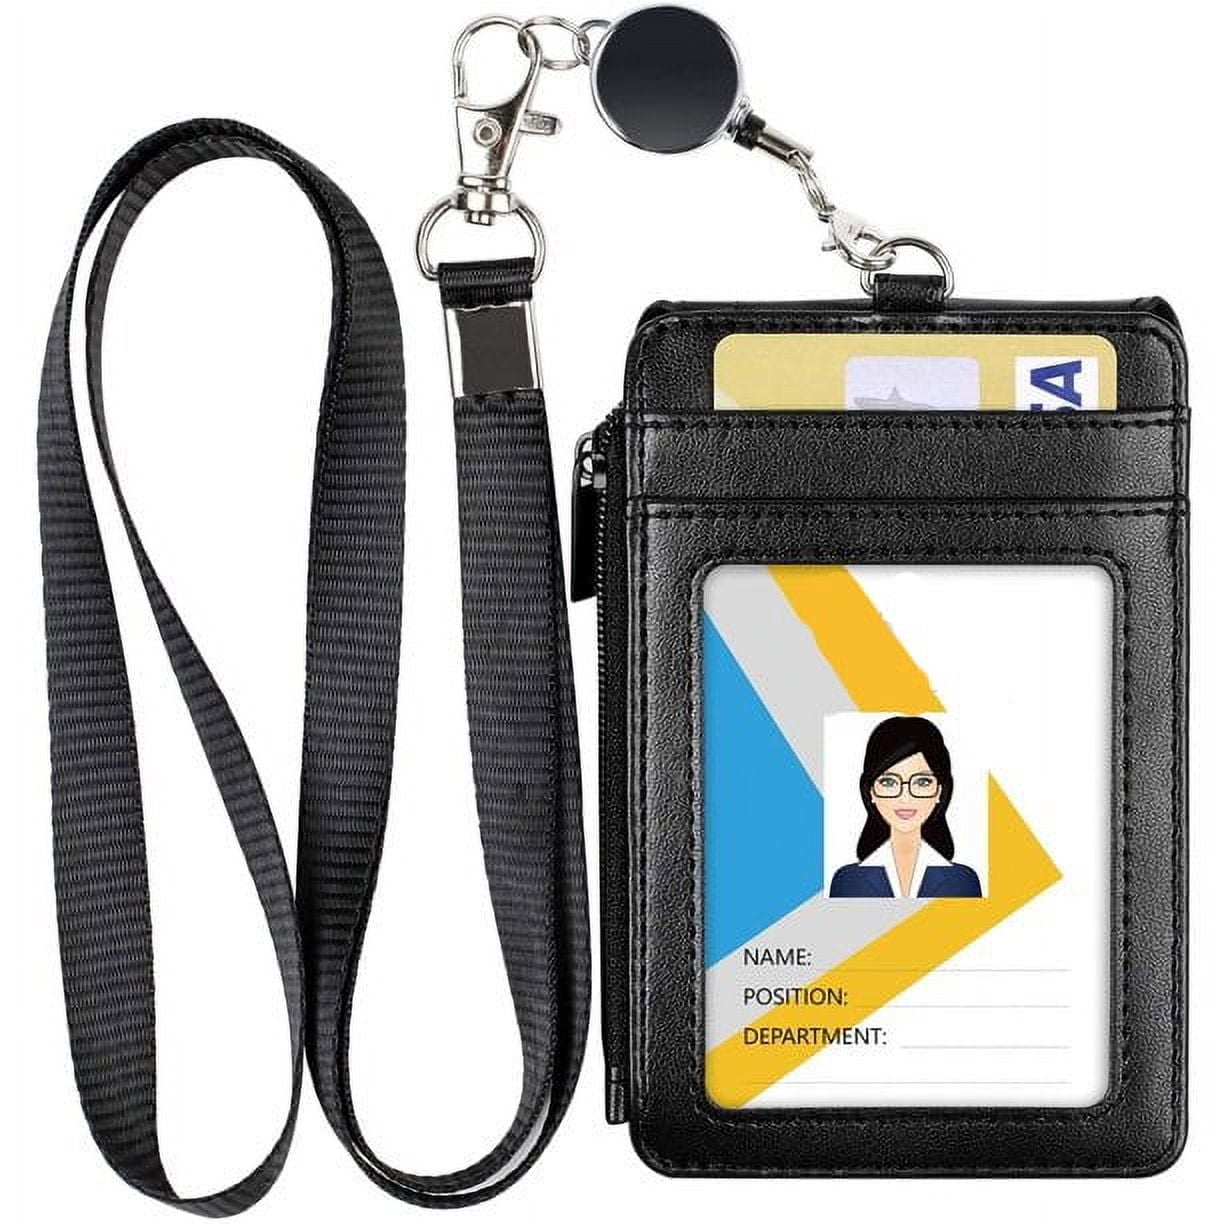 RFID Blocking ID Badge Holder (Holds 2 Cards) - SkimSAFE FIPS 201 Approved  - Dual Sided Shield Blocks 13.56MHz Radio Signal - Specialist ID (Black)